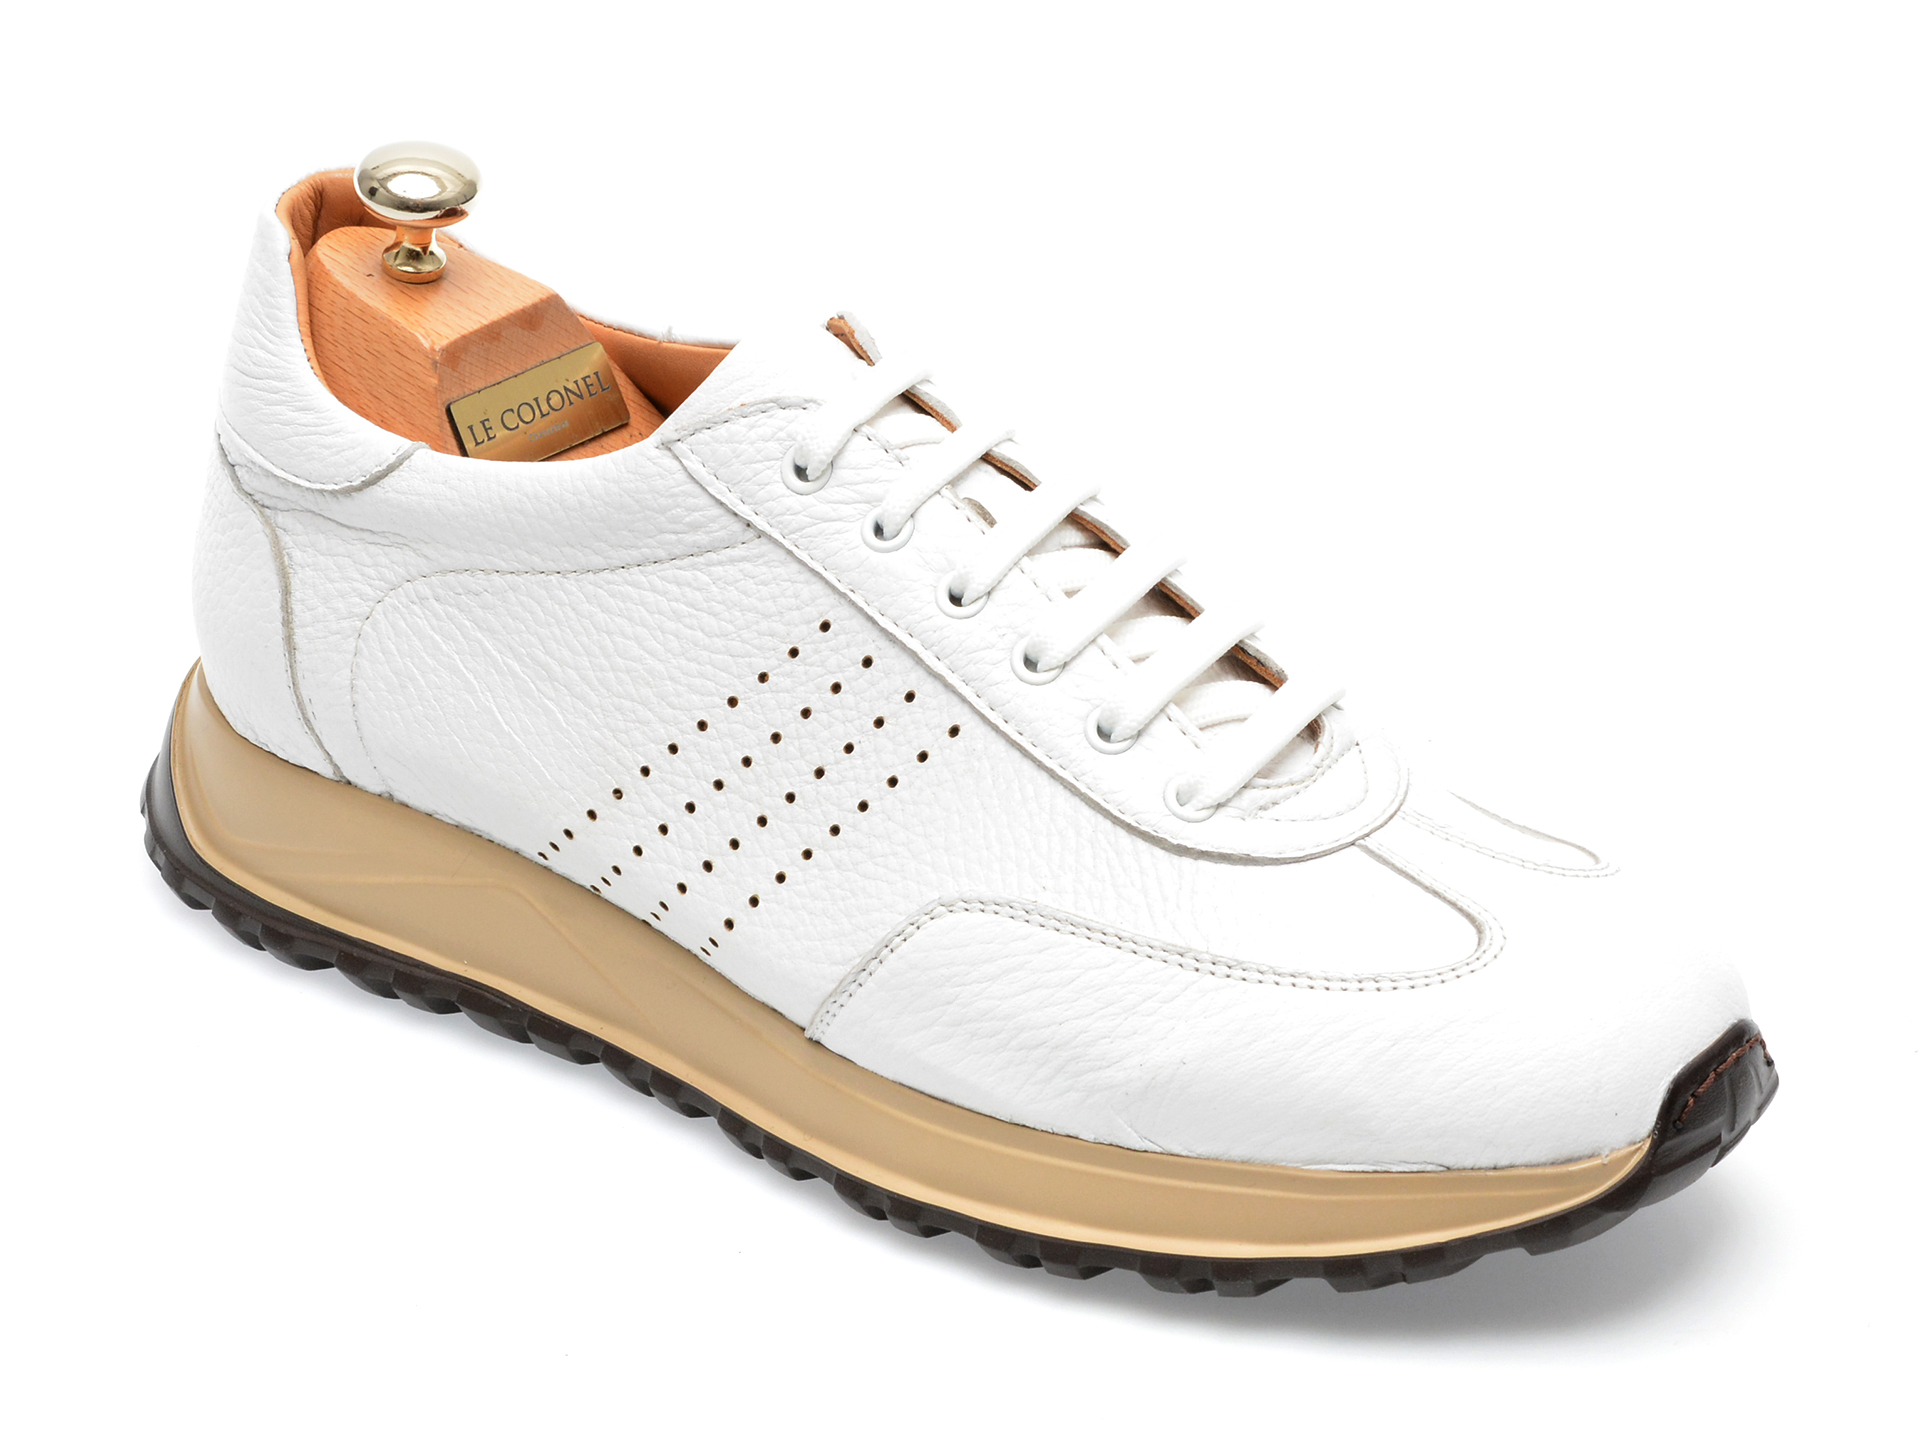 Pantofi LE COLONEL albi, 62818, din piele naturala